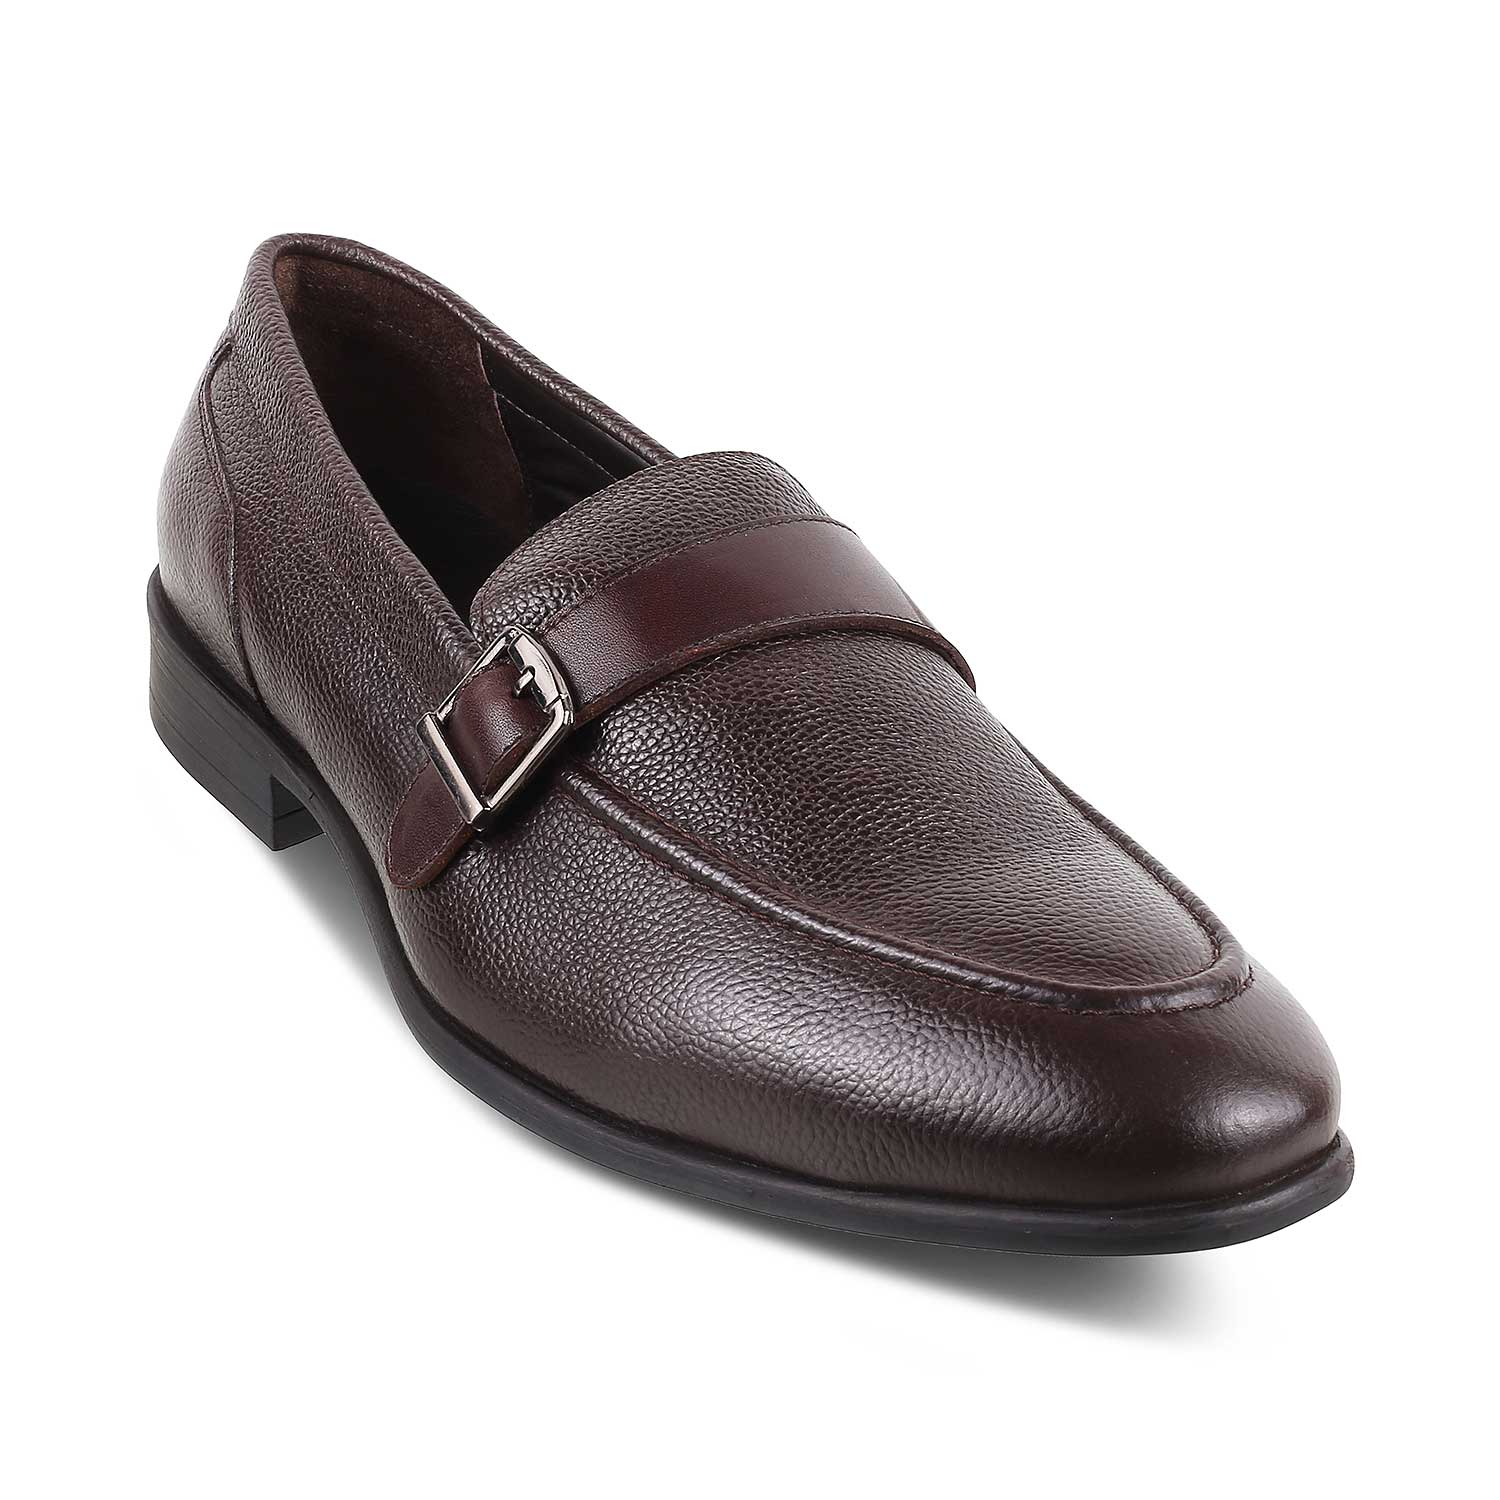 Tresmode-The Heiden Brown Men's Leather Loafers Tresmode-Tresmode